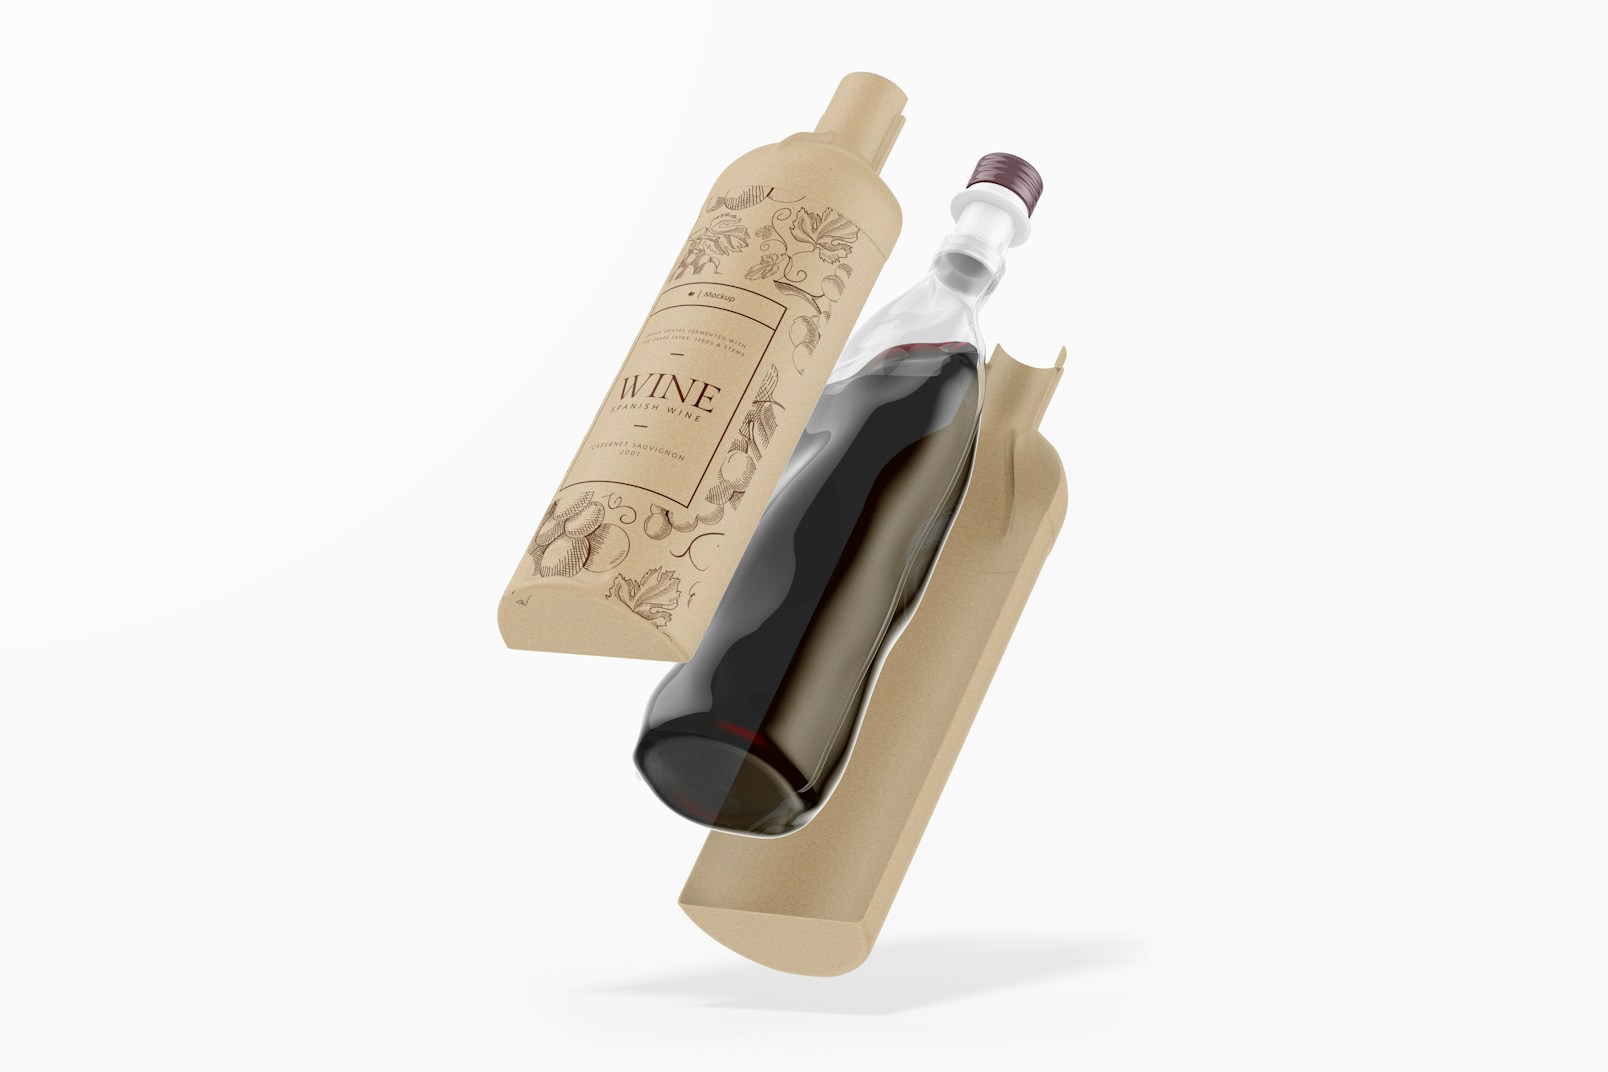 Cardboard Wine Bottle Mockup, Floating